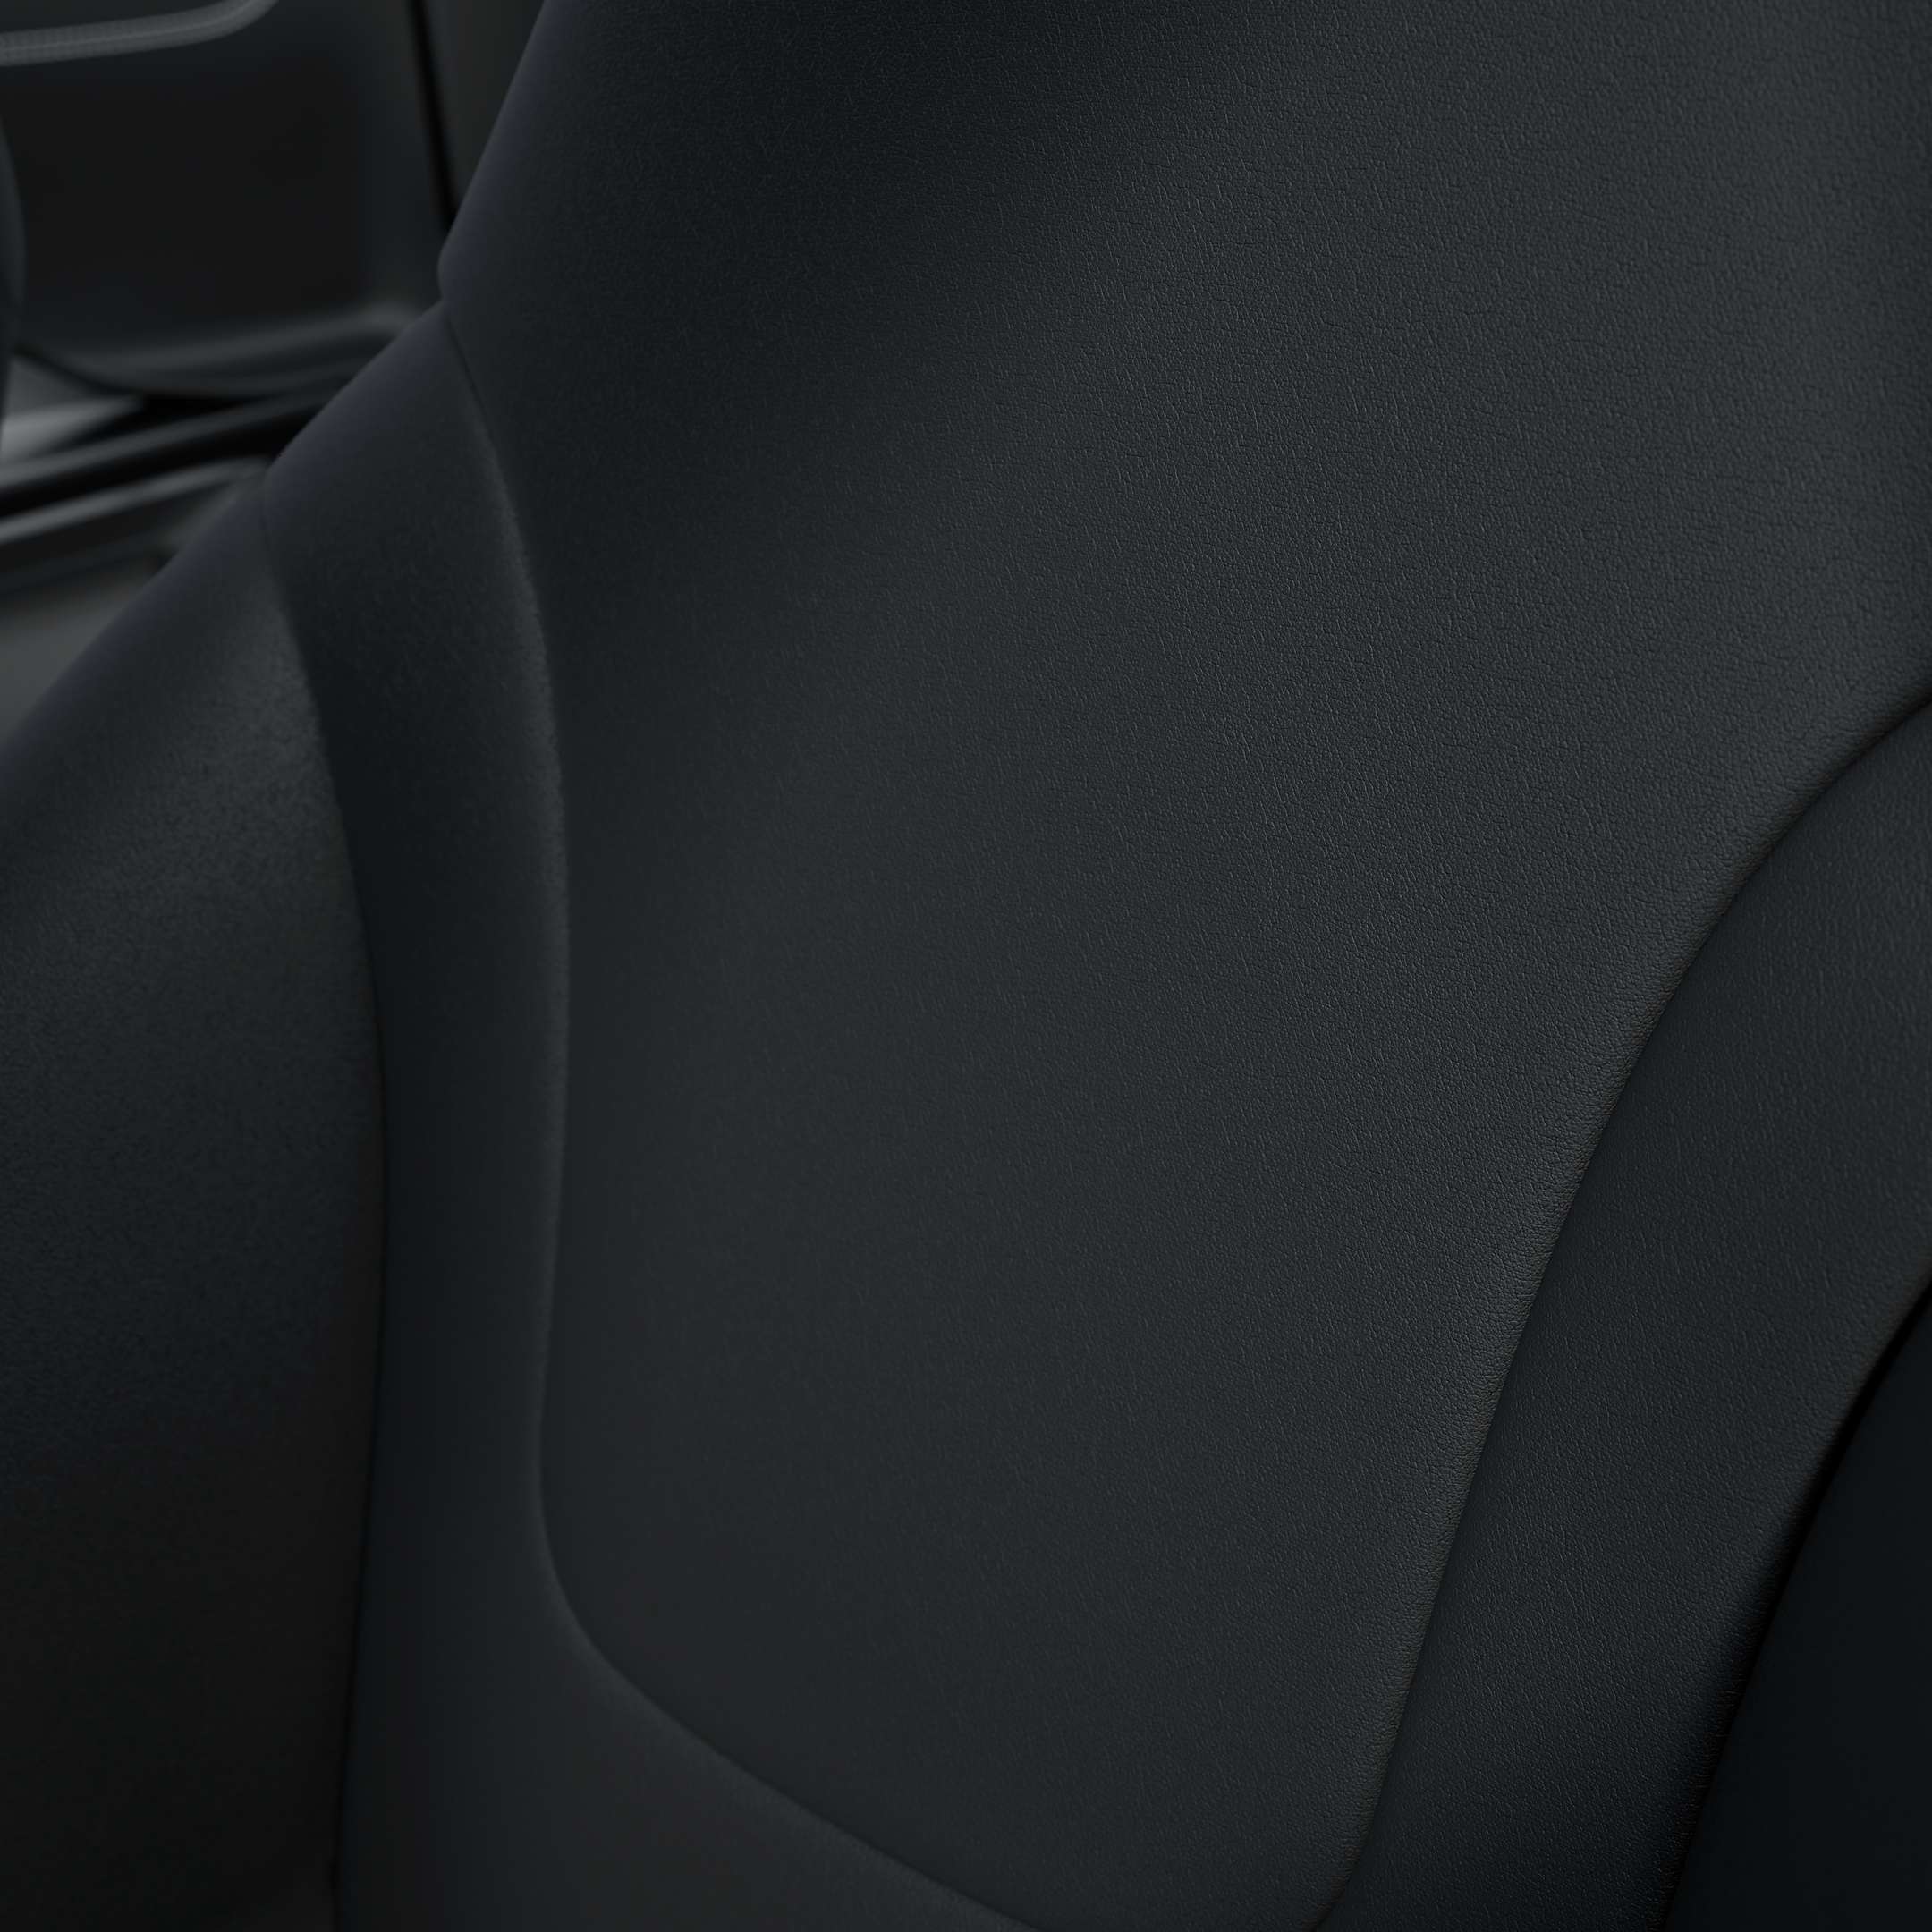 Interior seat for the interior colour B48